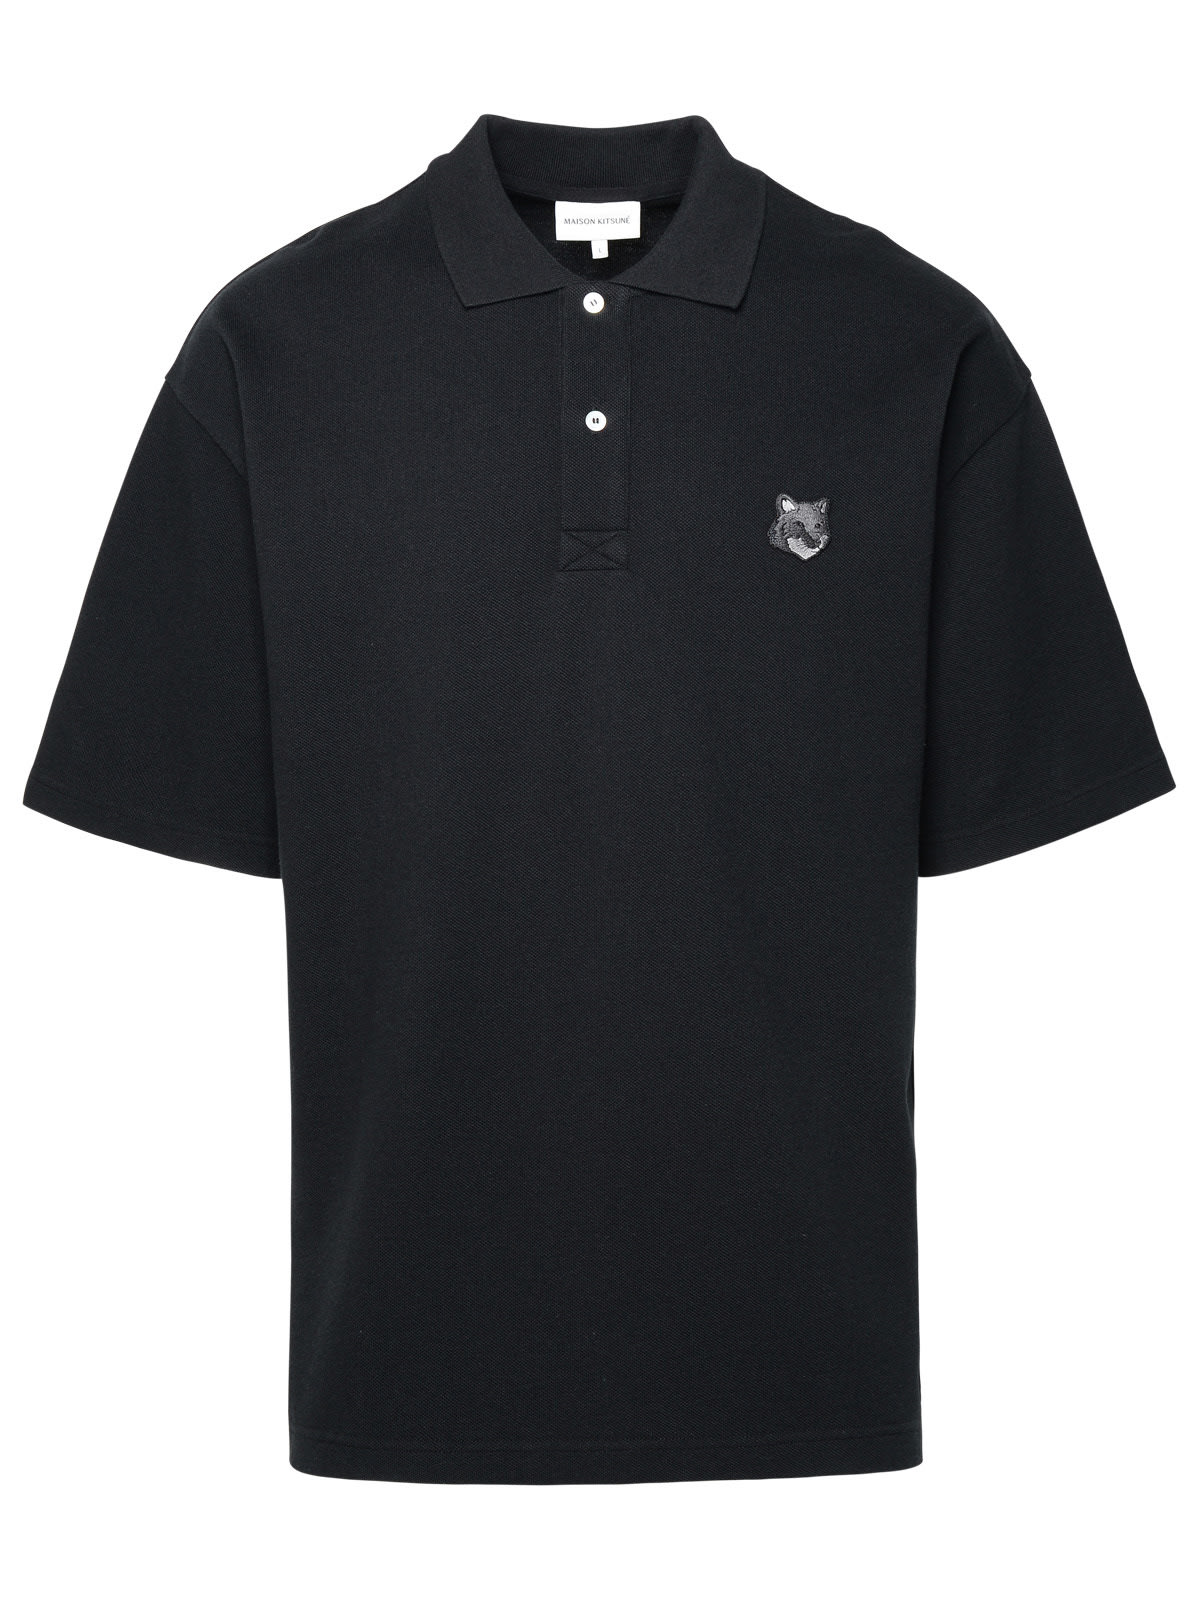 Maison Kitsuné Black Cotton Polo Shirt